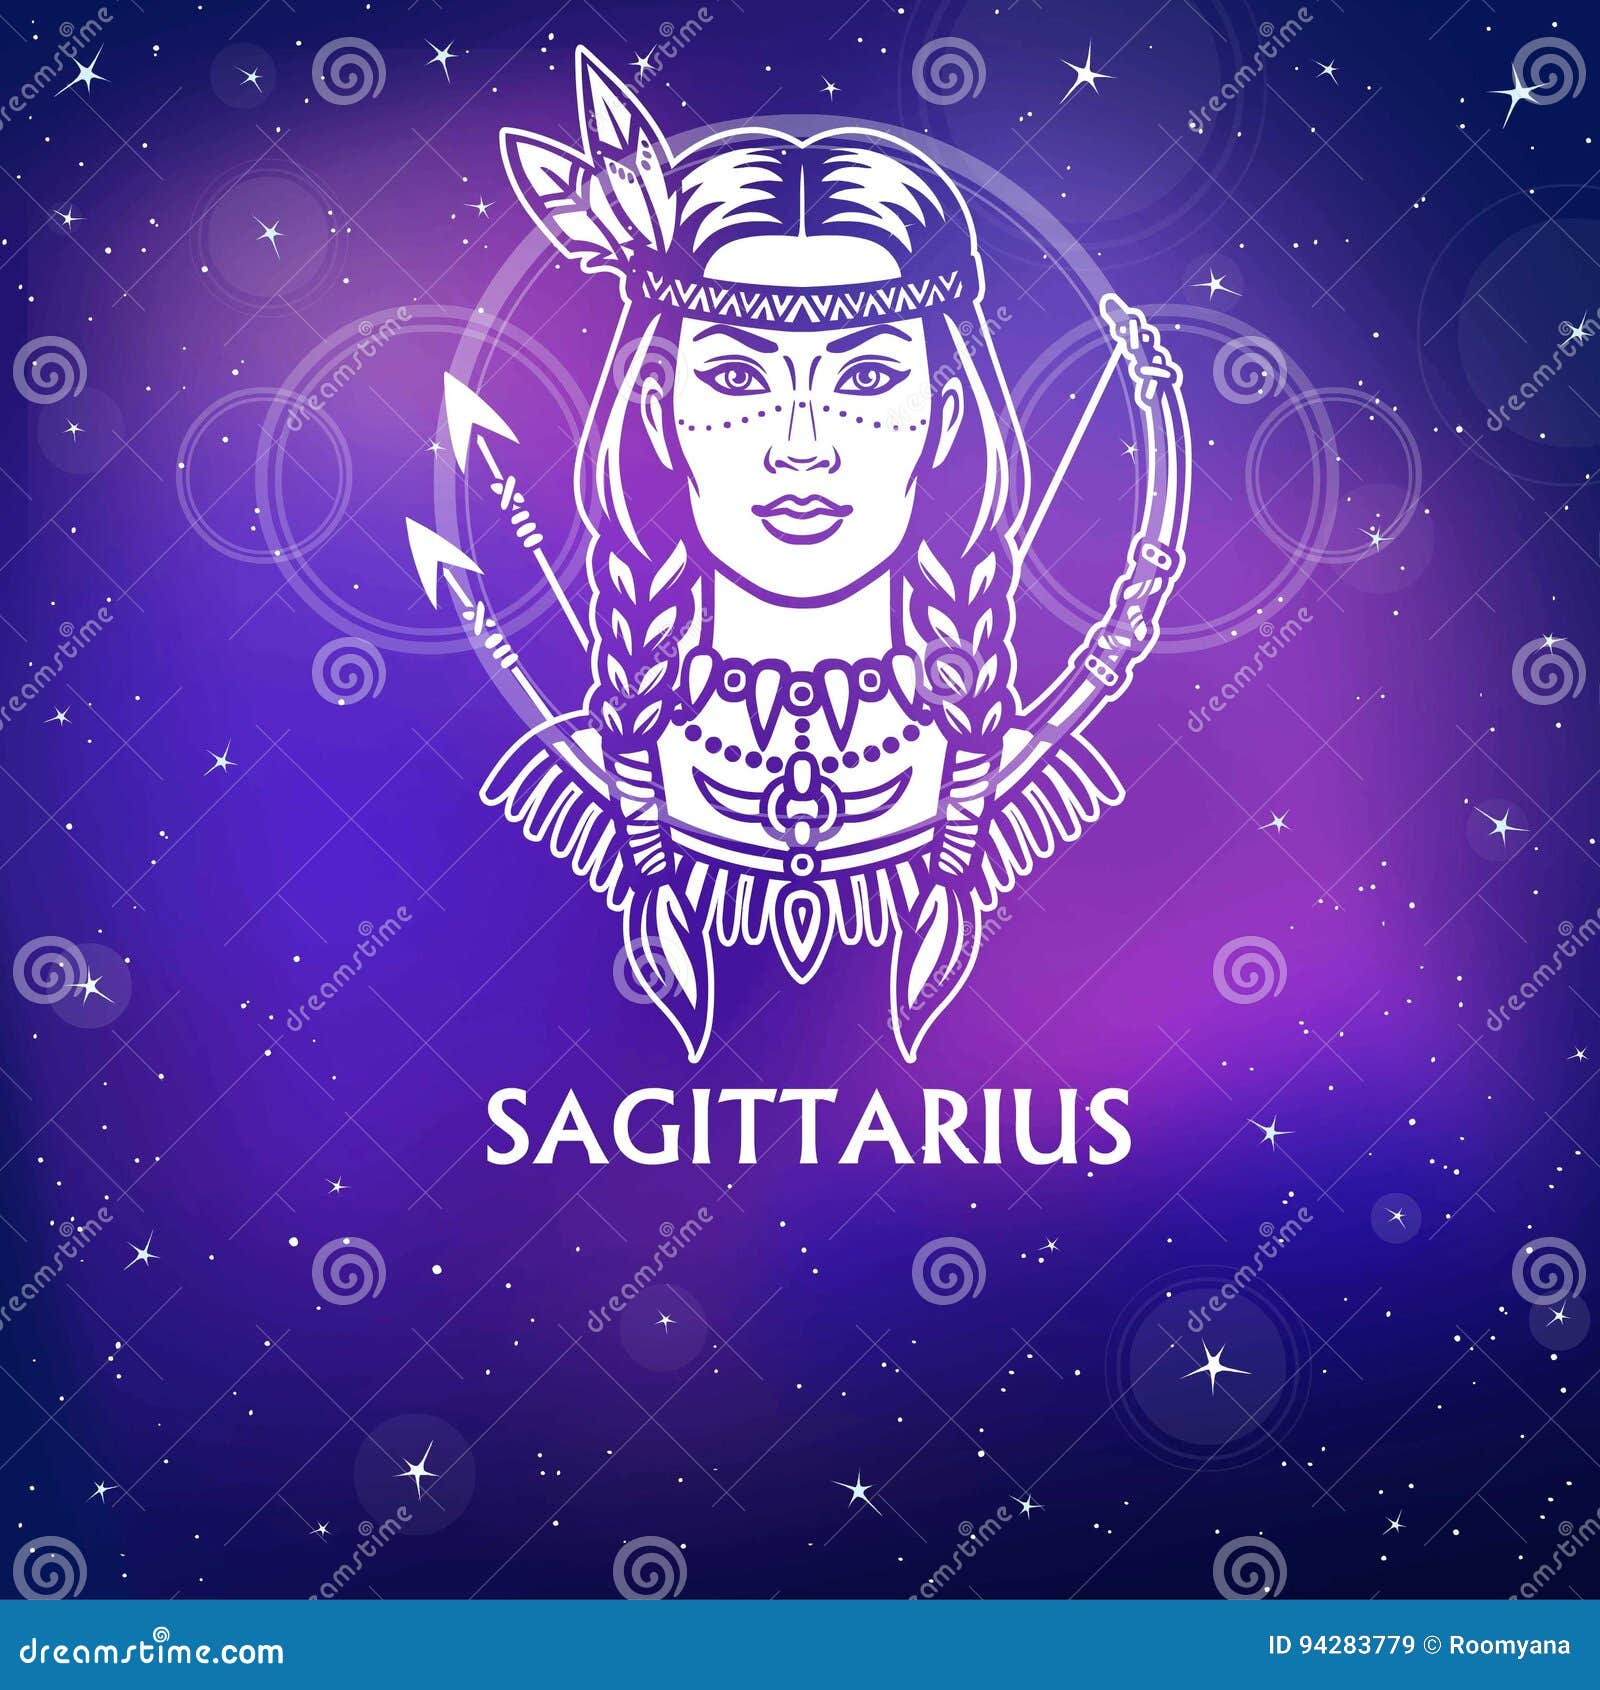 zodiac sign sagittarius. fantastic princess, animation portrait. white drawing, background - the night stellar sky.